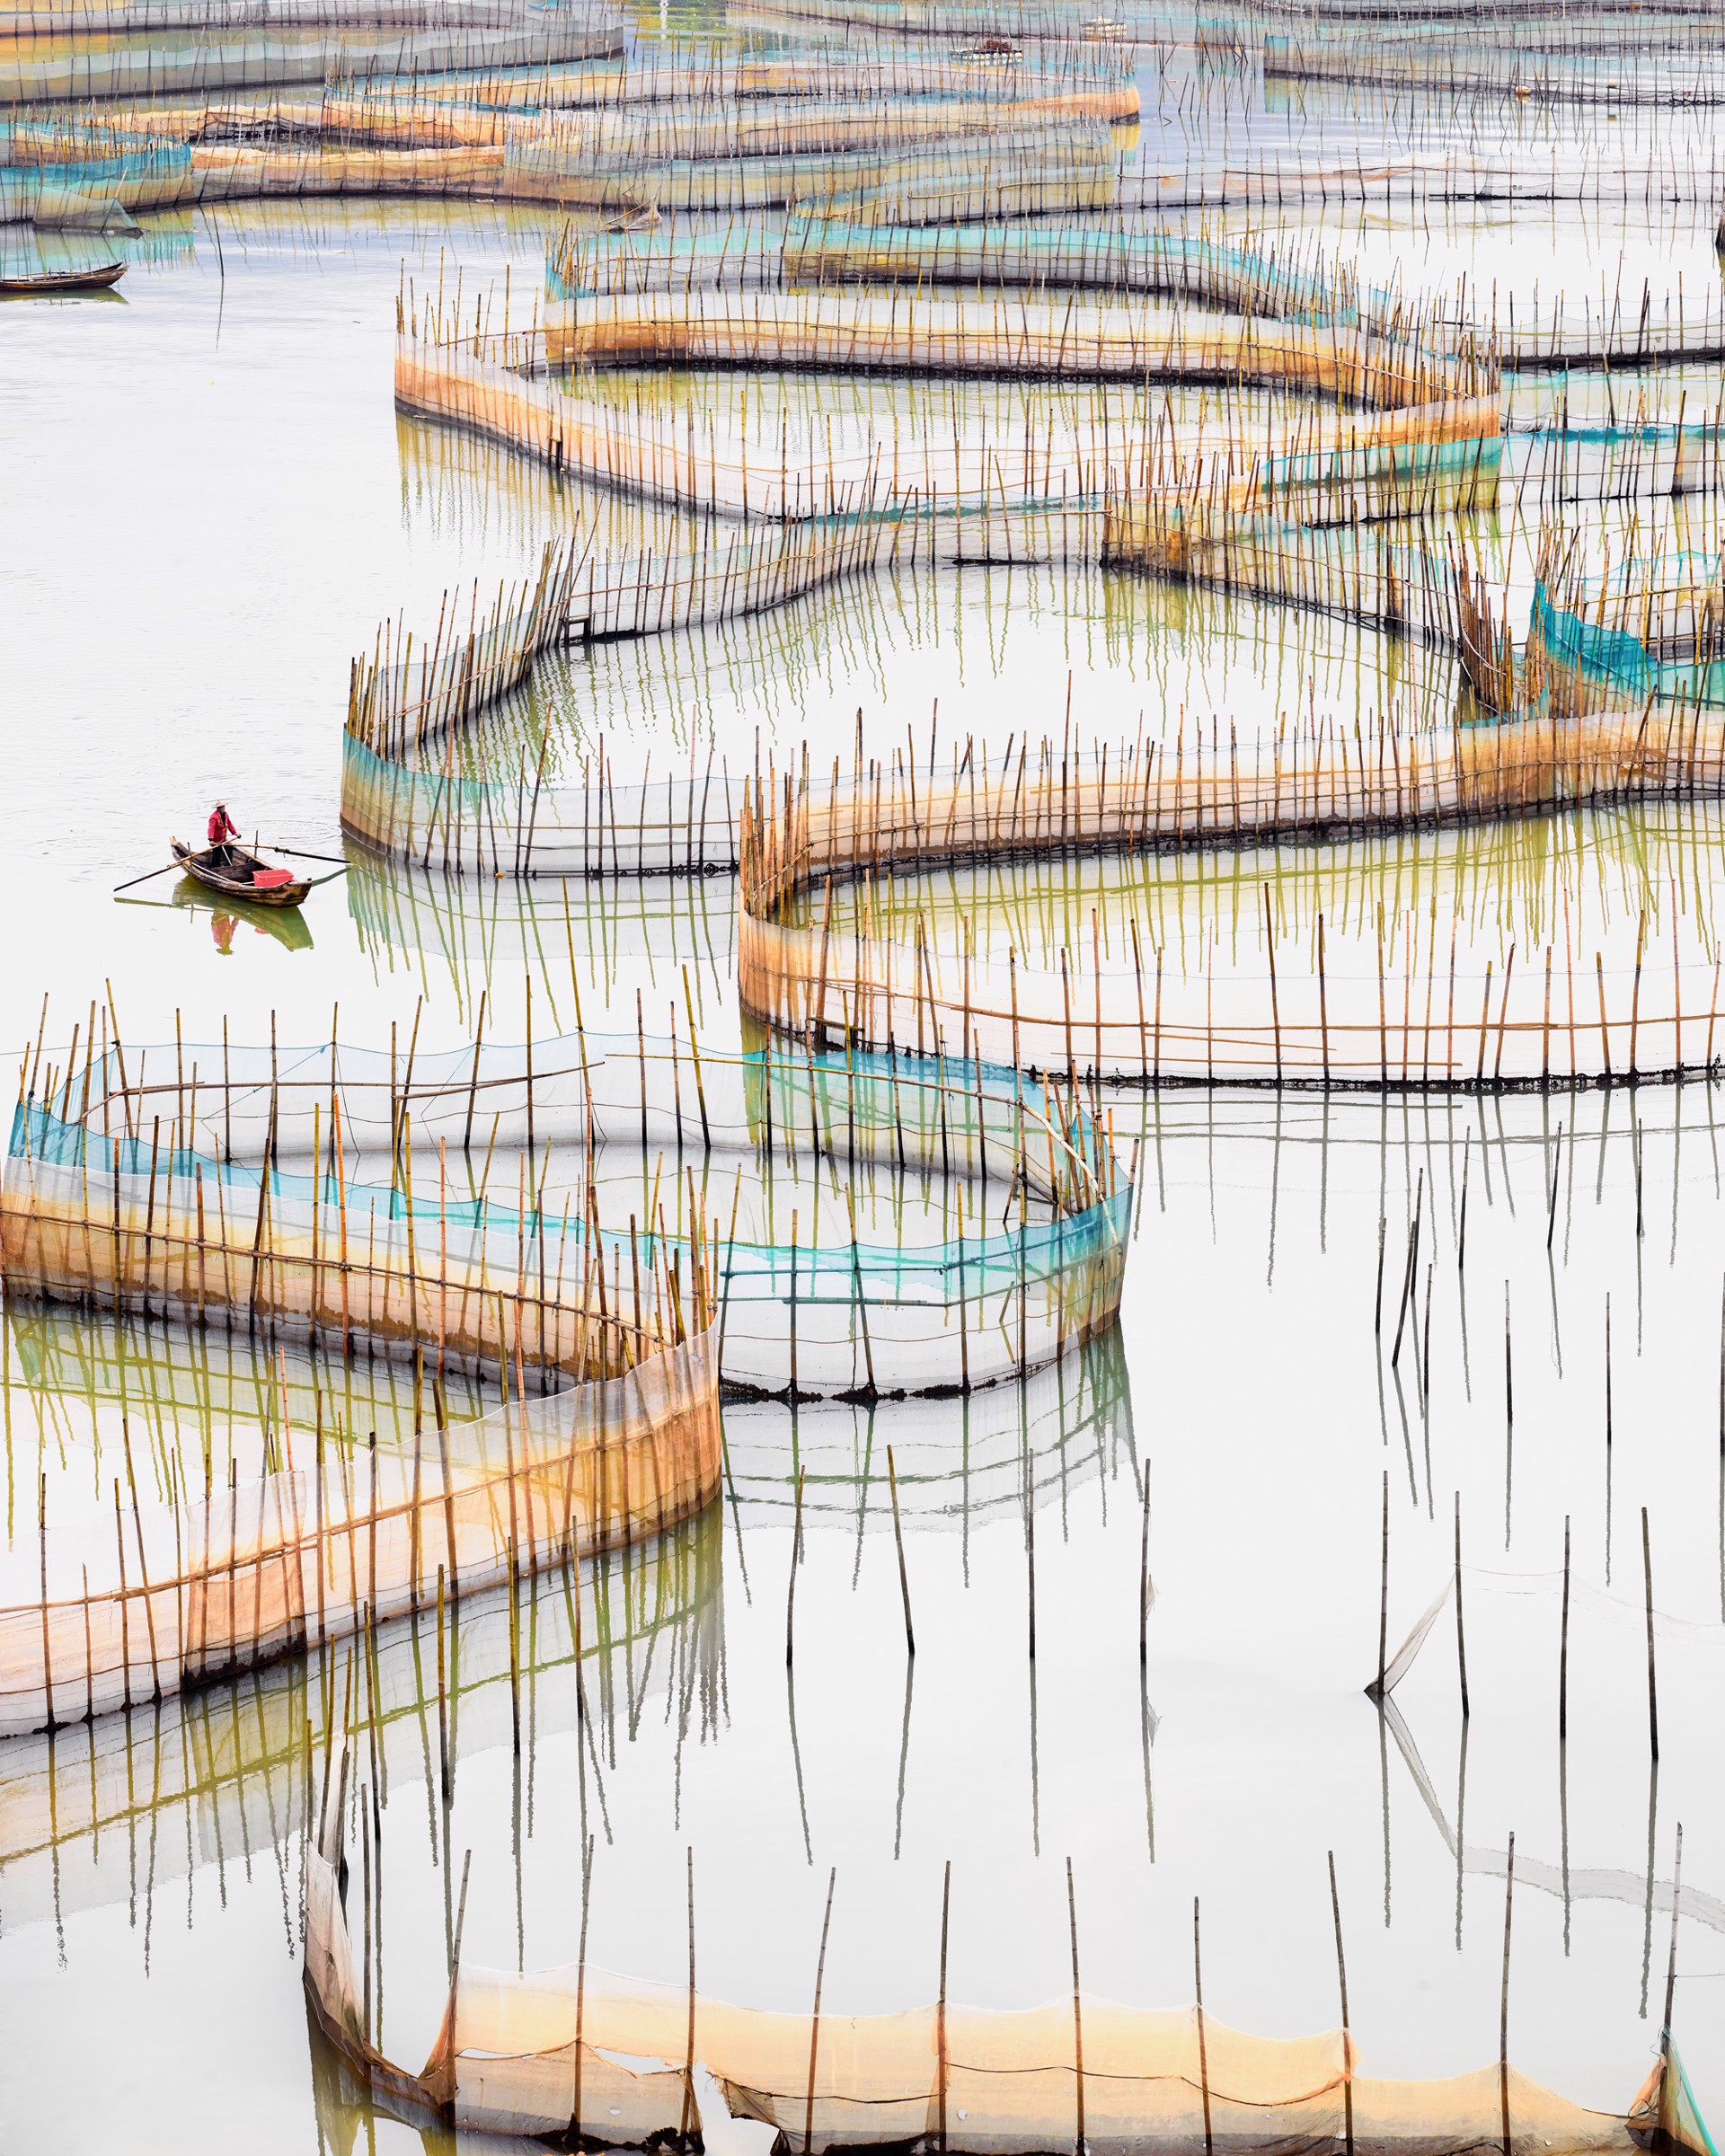 Nets 01 (Vertical), Fujian, China,2016 by David Burdeny